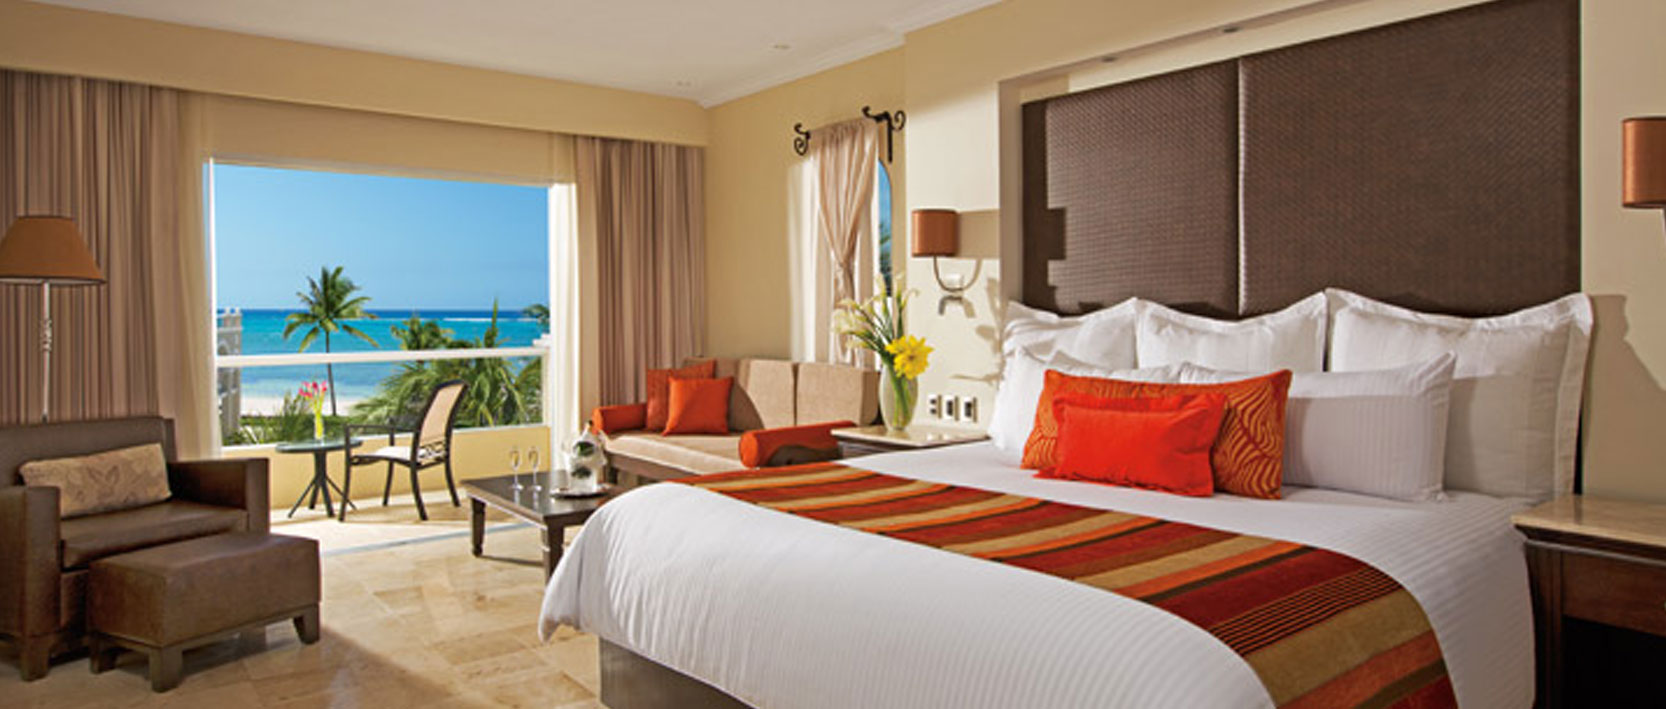 Dreams Tulum Resort Accommodations - Junior Suite Ocean View